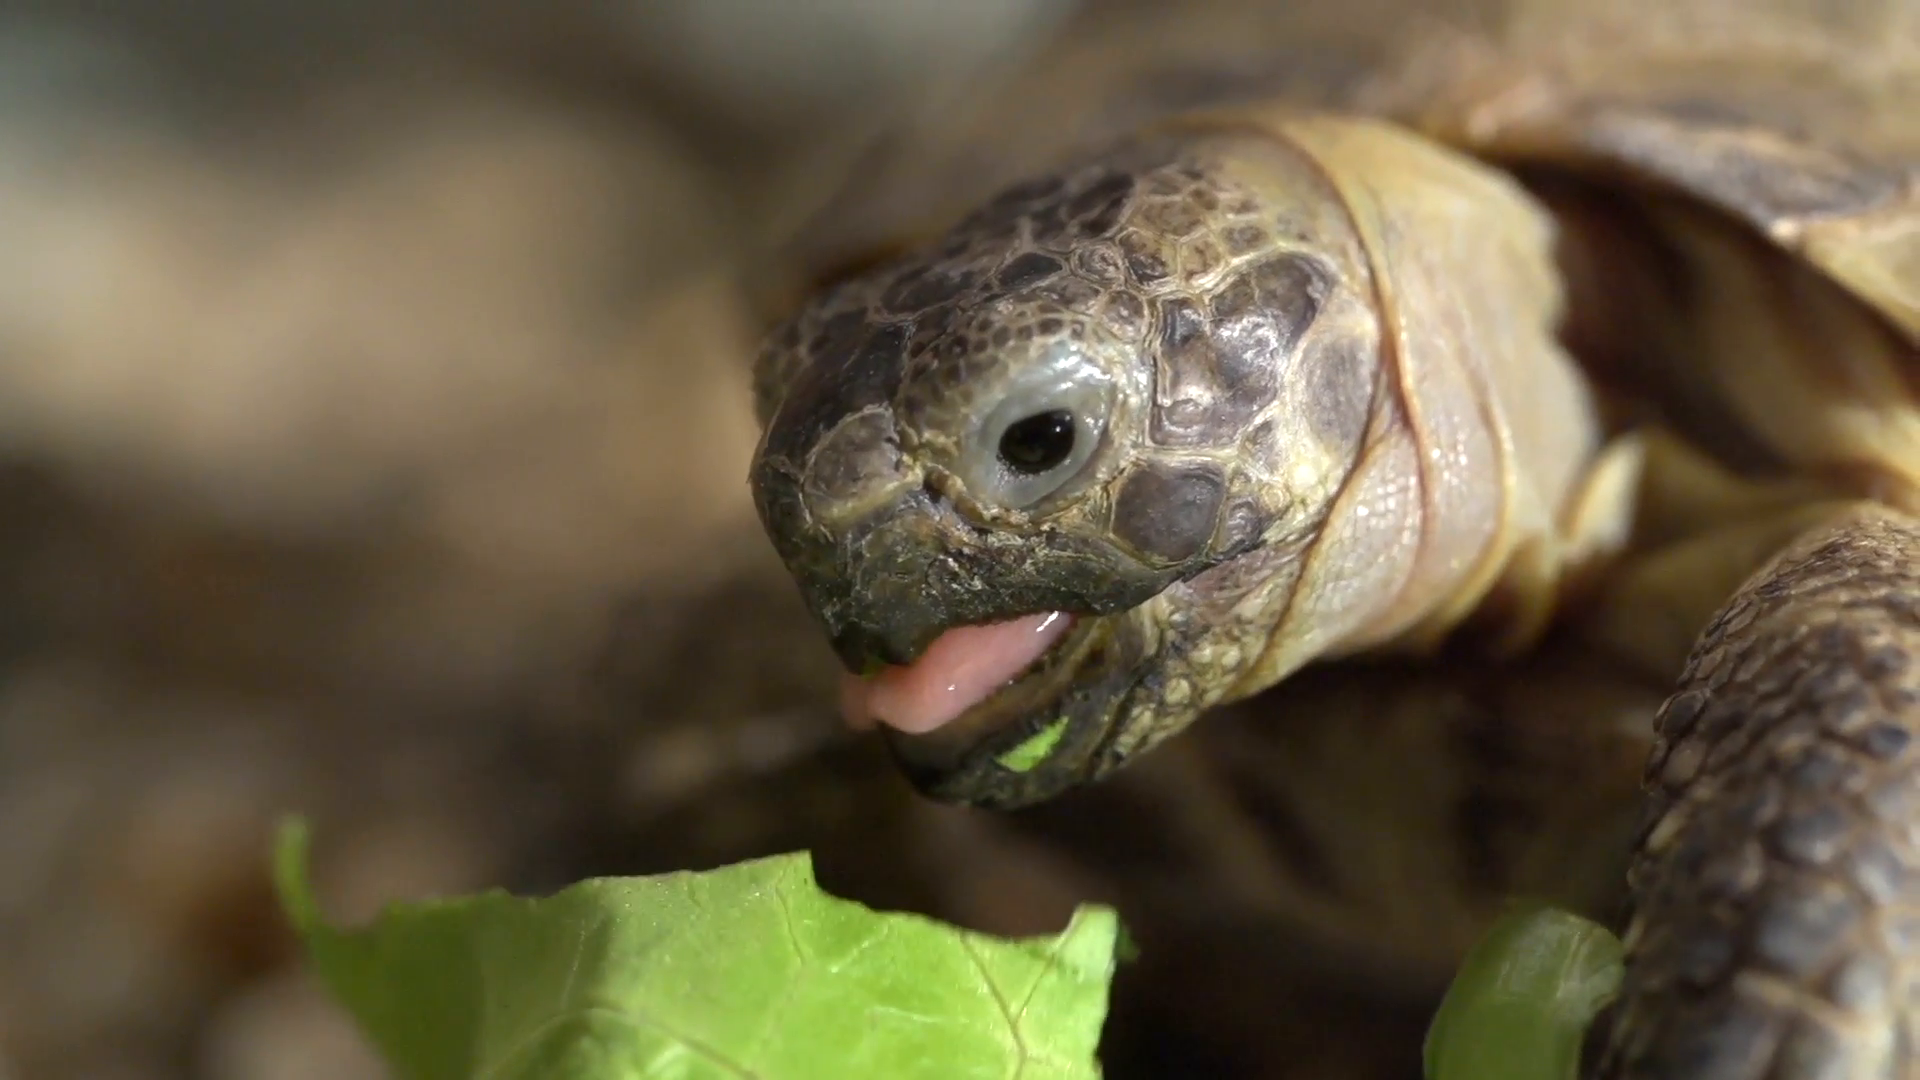 Overland Turtle Eats Green Lettuce Leave